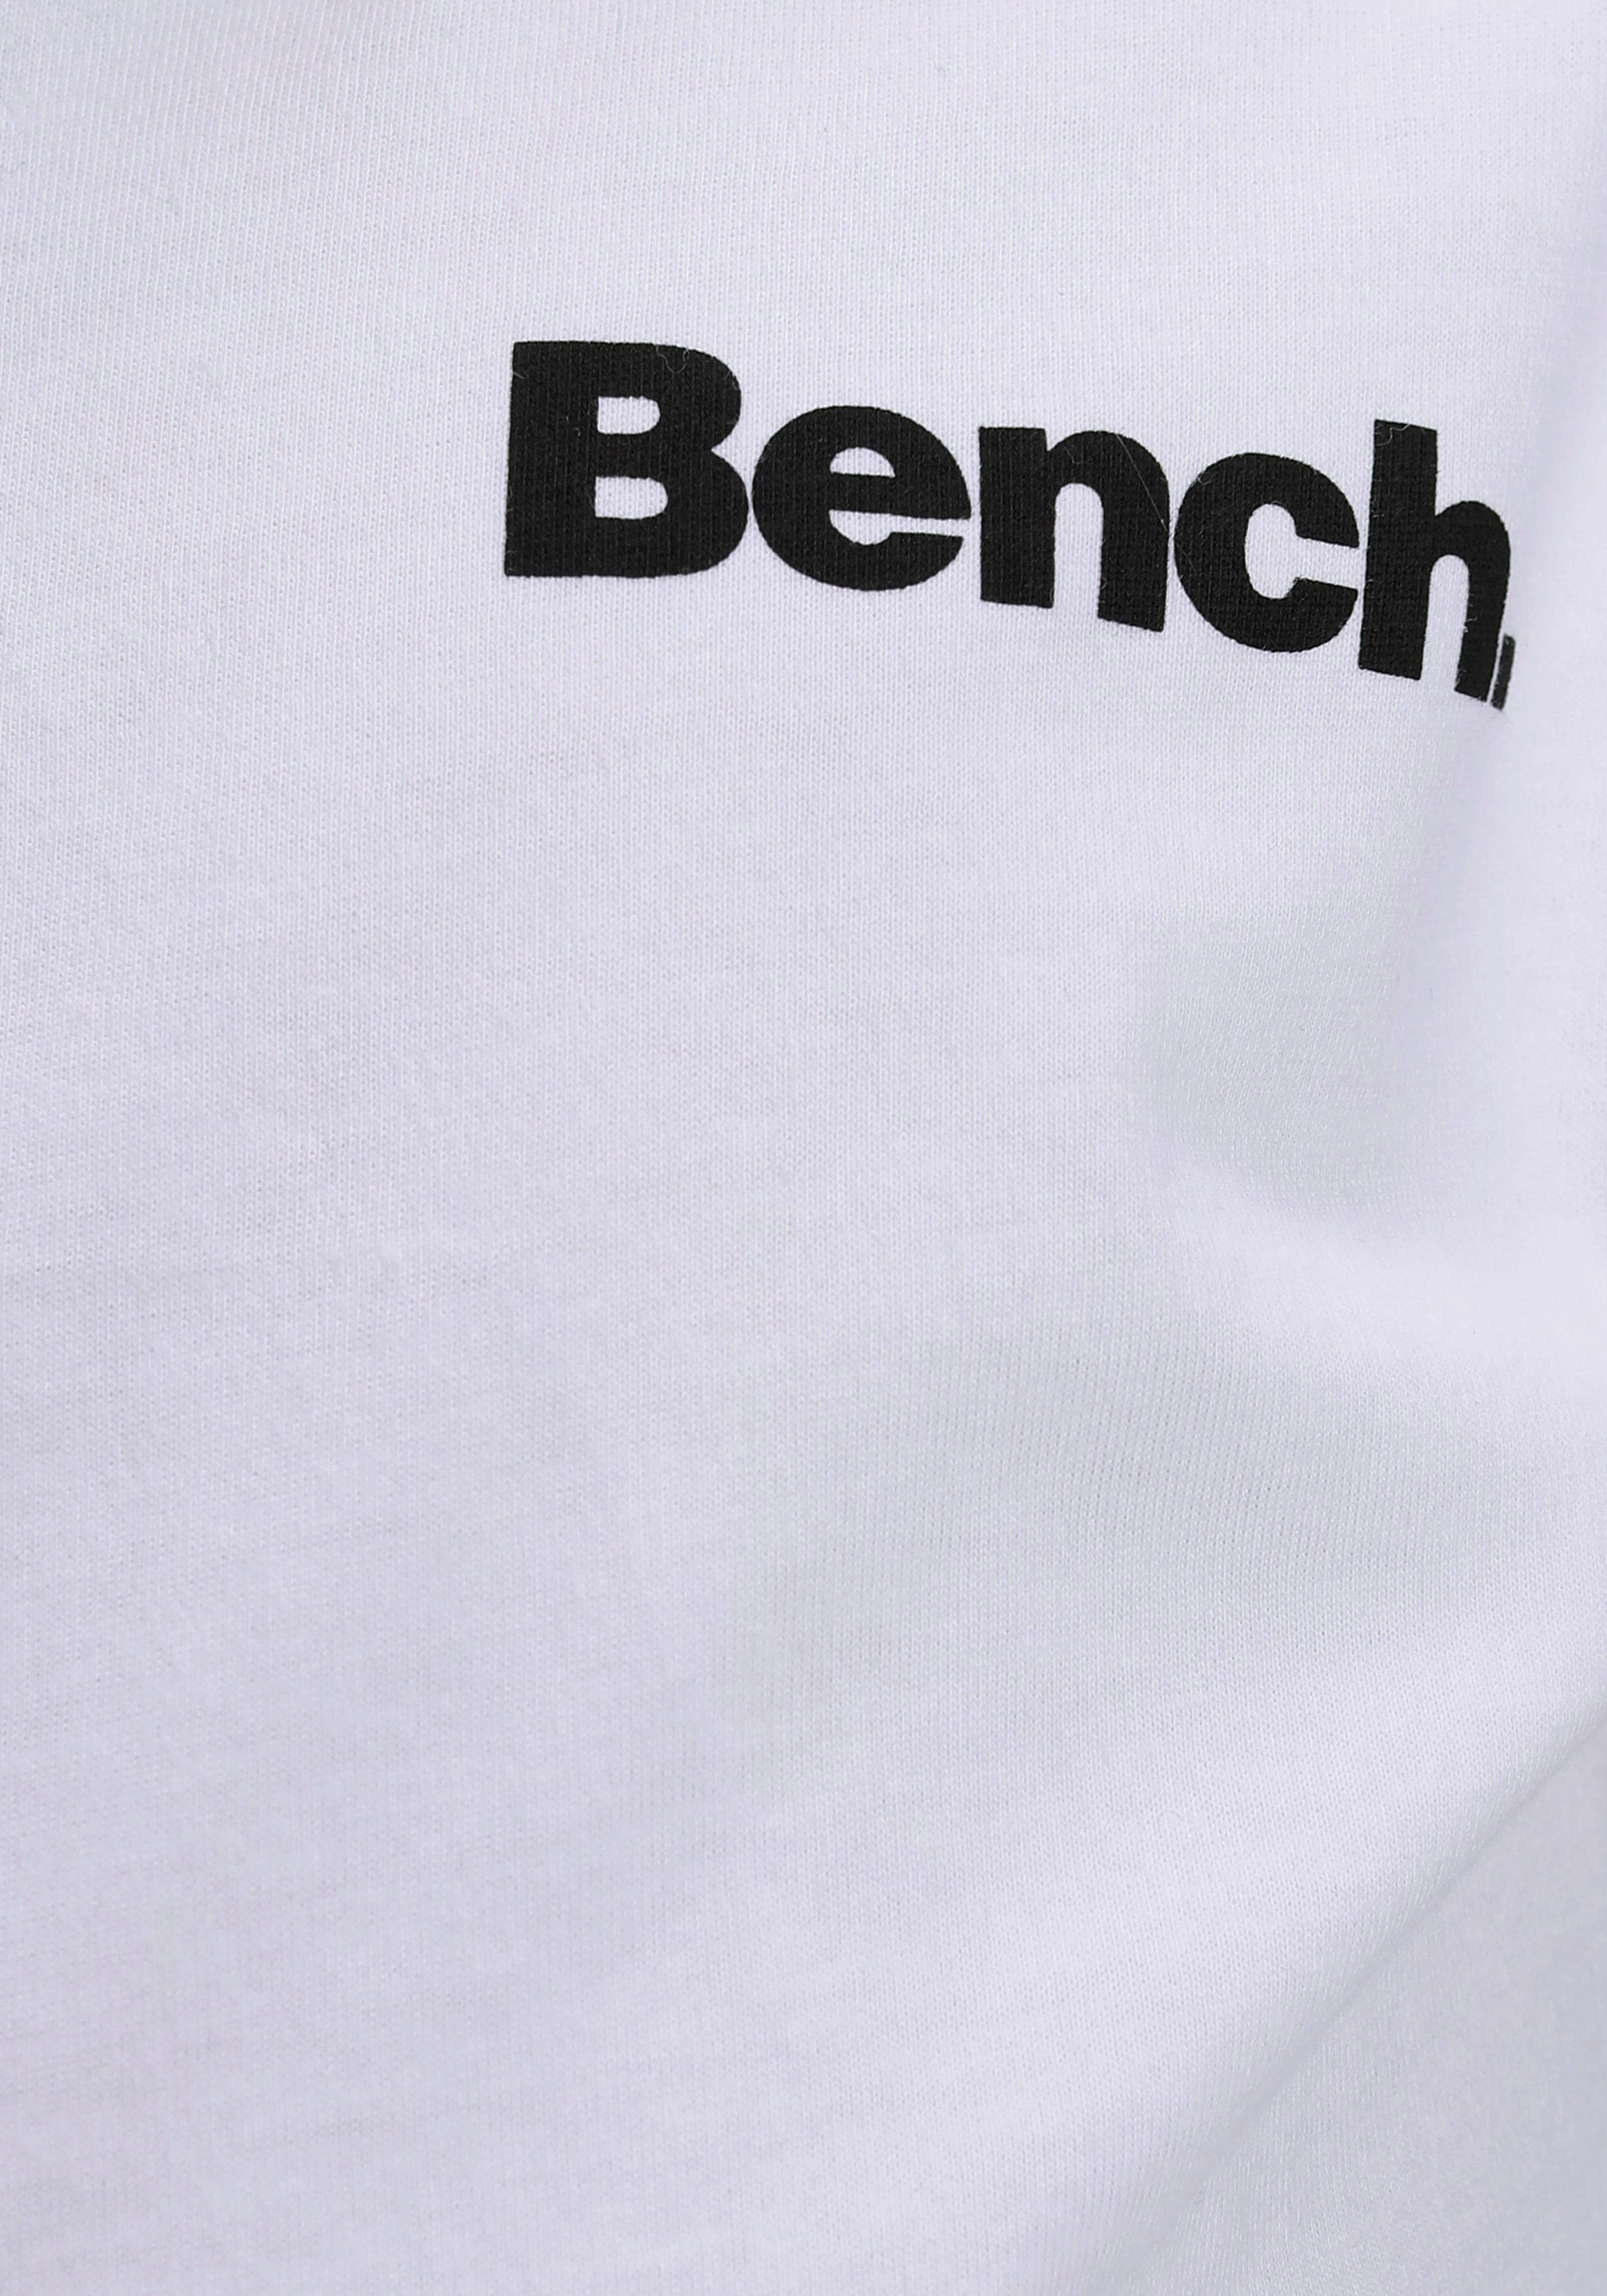 Bench. T-Shirt Rückendruck Logo mit